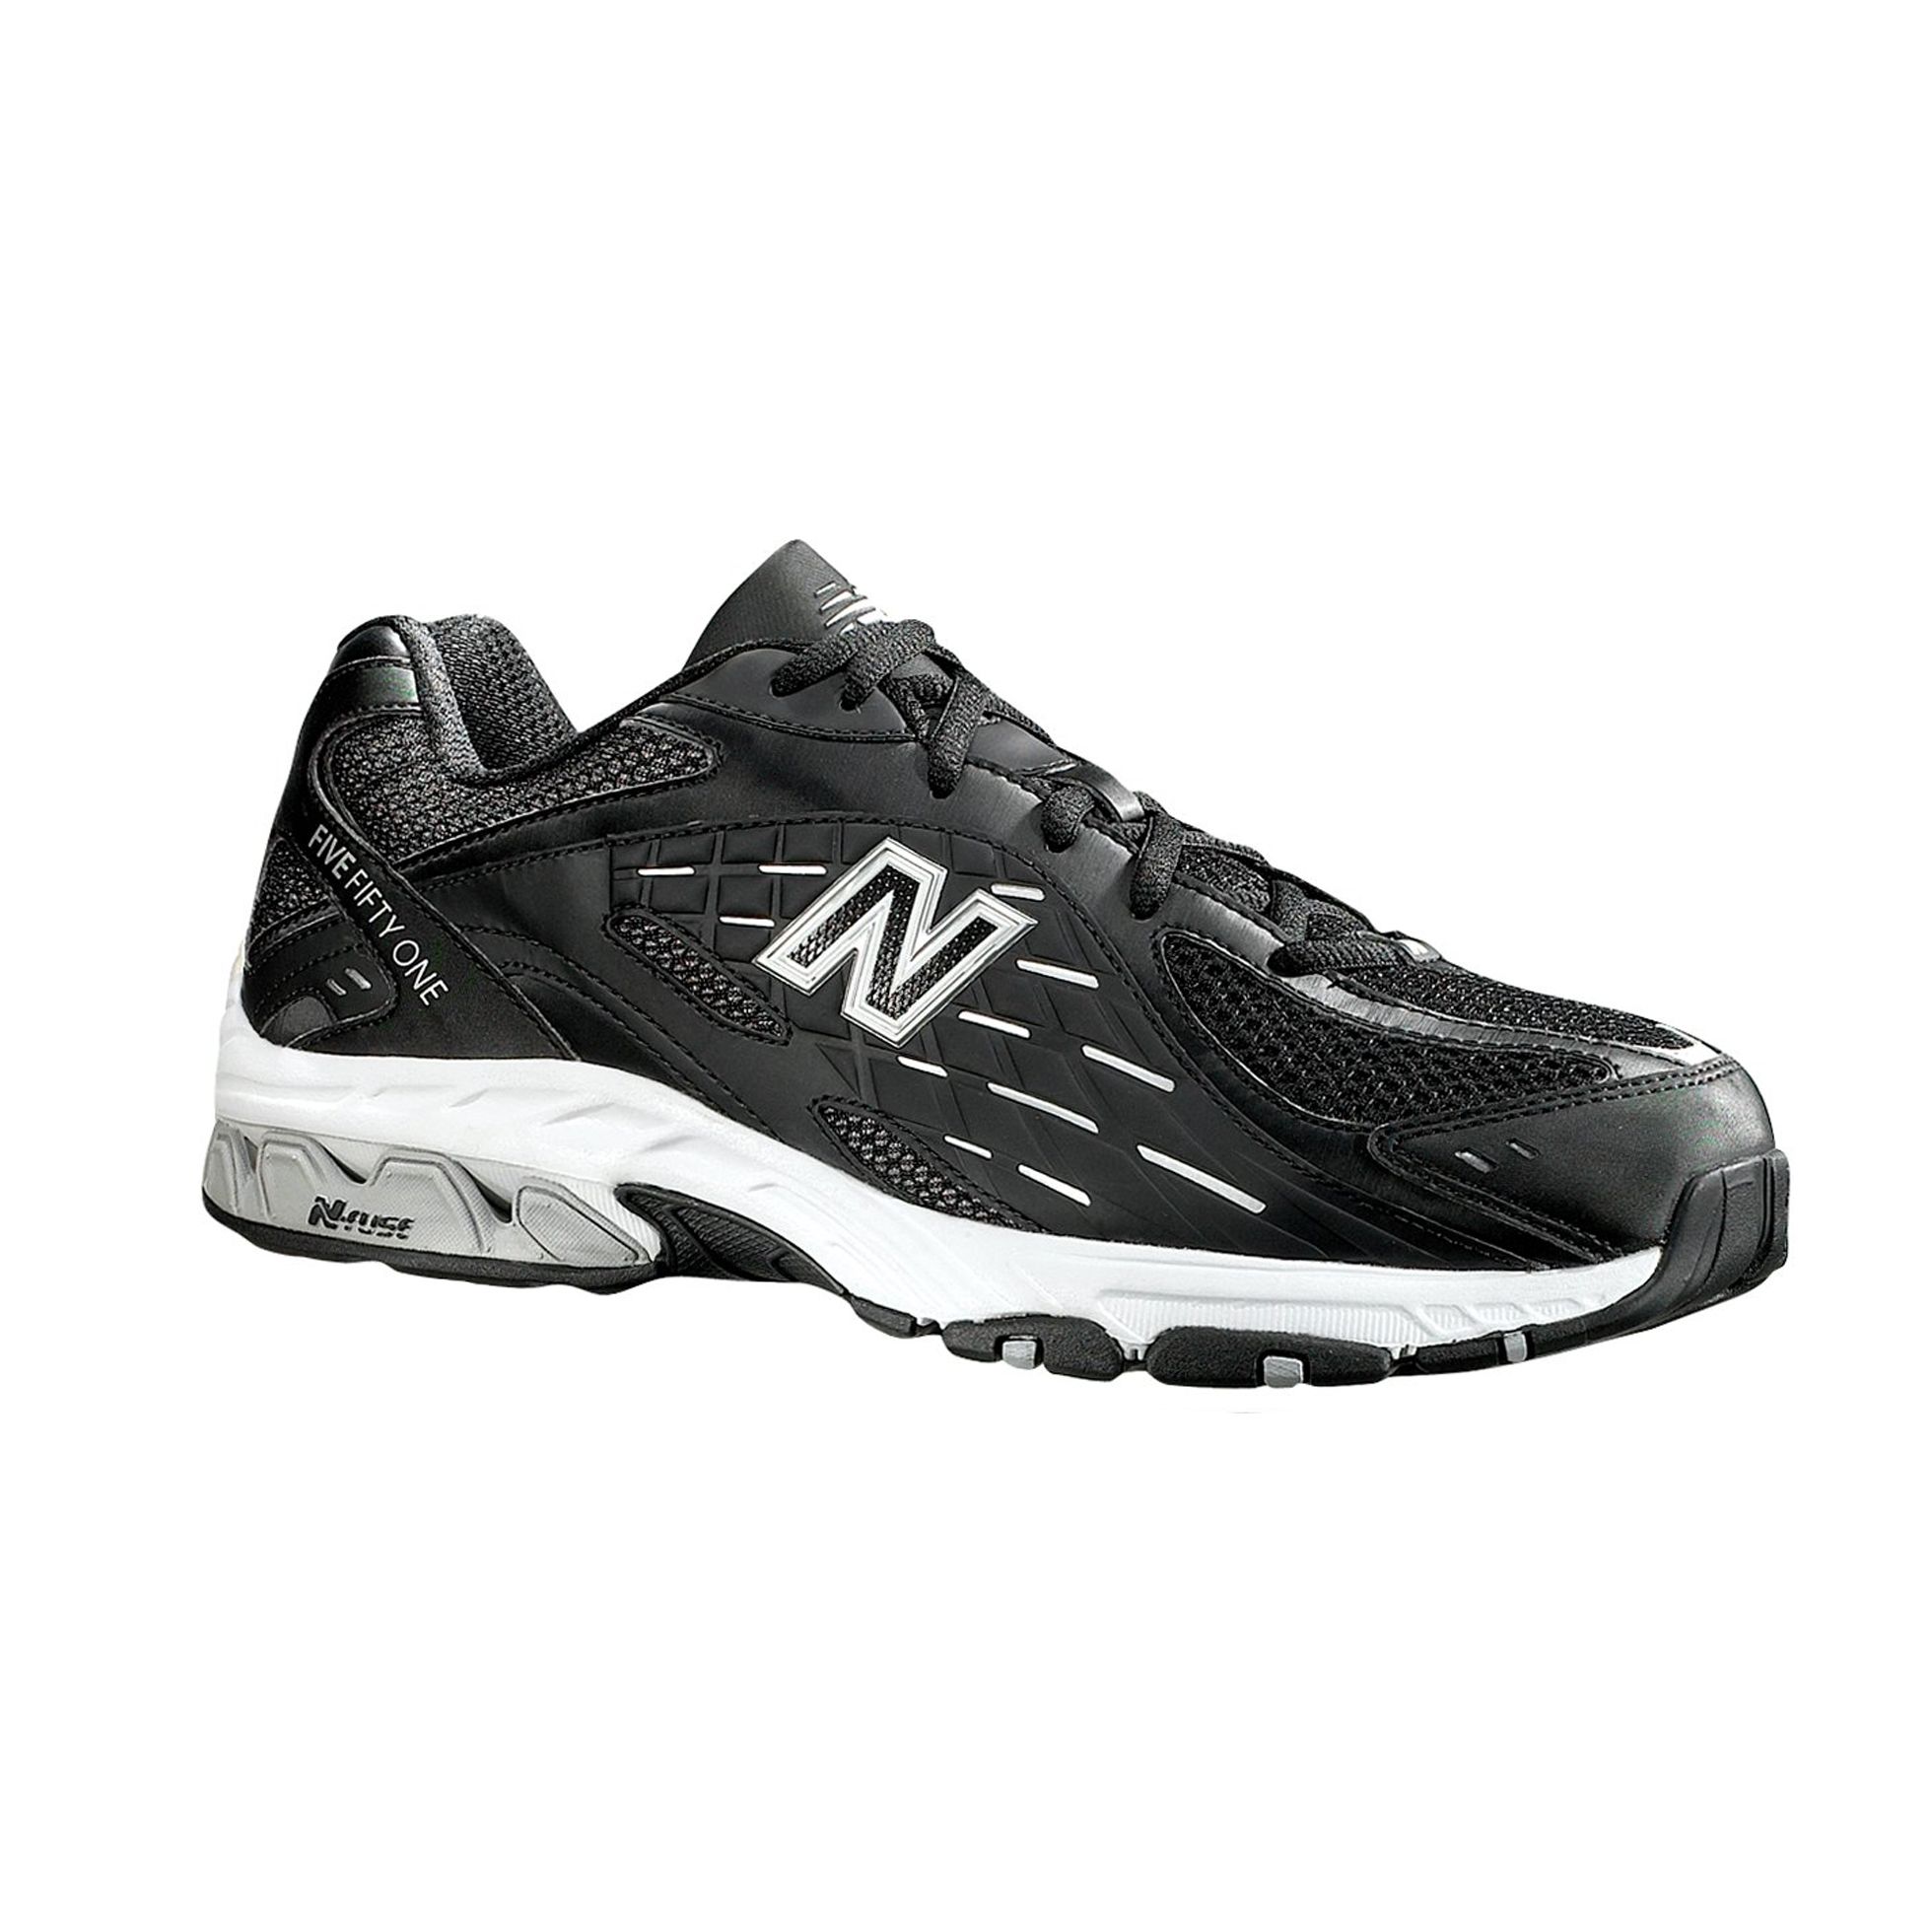 New Balance Men's 551 Shoe - Black/Silver - Clothing, Shoes \u0026 Jewelry -  Shoes - Men's Shoes - Men's Sneakers \u0026 Athletic Shoes